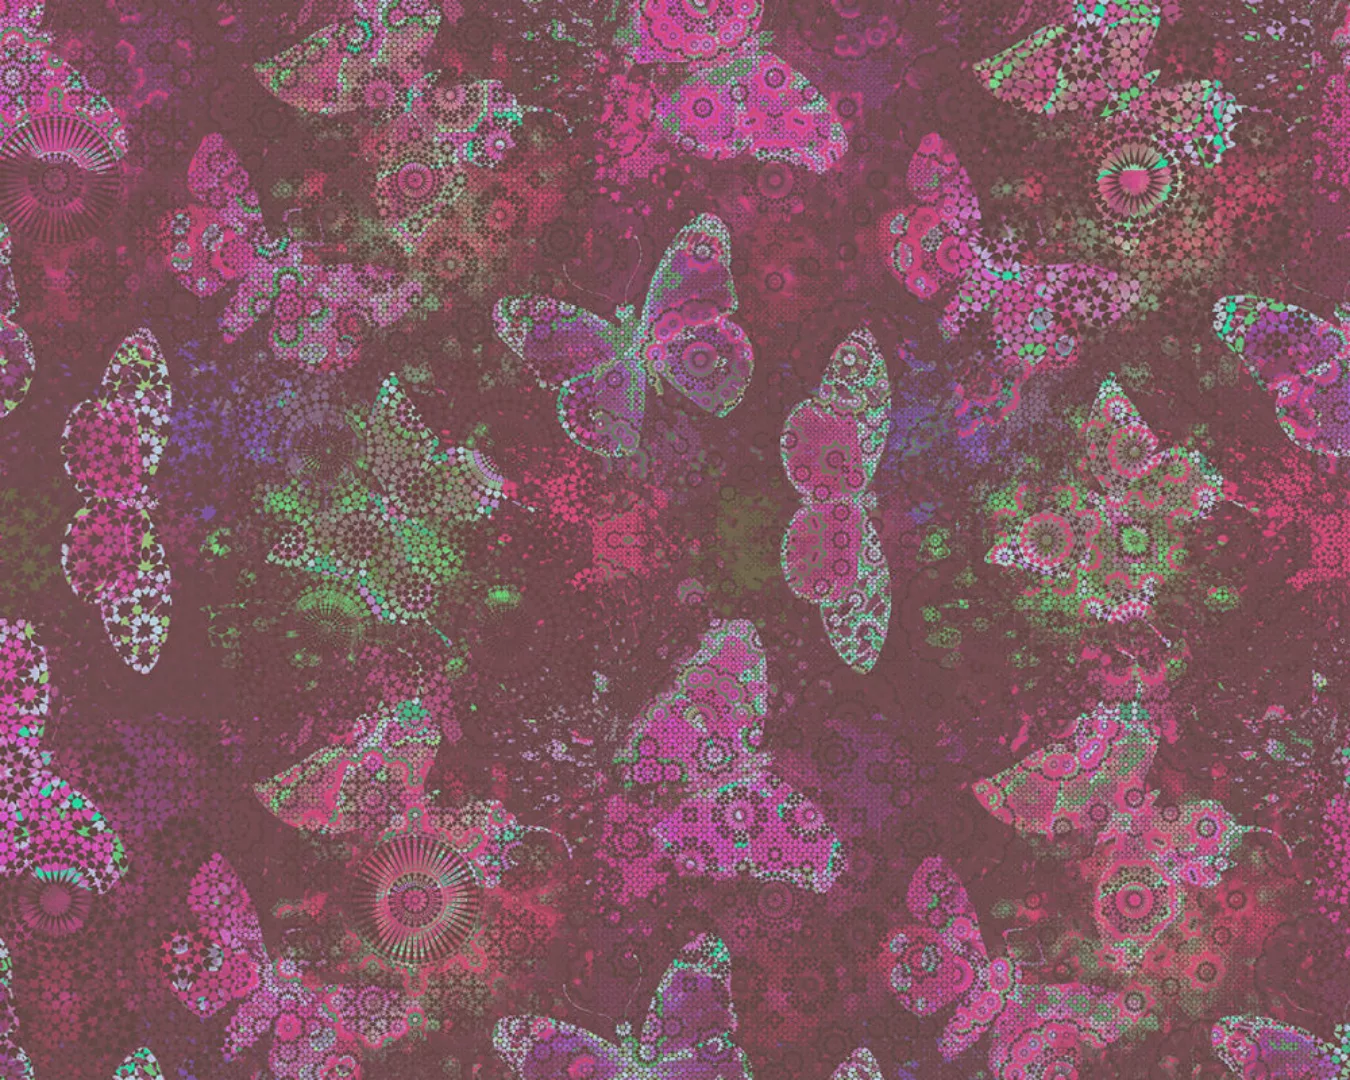 Fototapete "Butterflies Pink" 4,00x2,50 m / Glattvlies Perlmutt günstig online kaufen